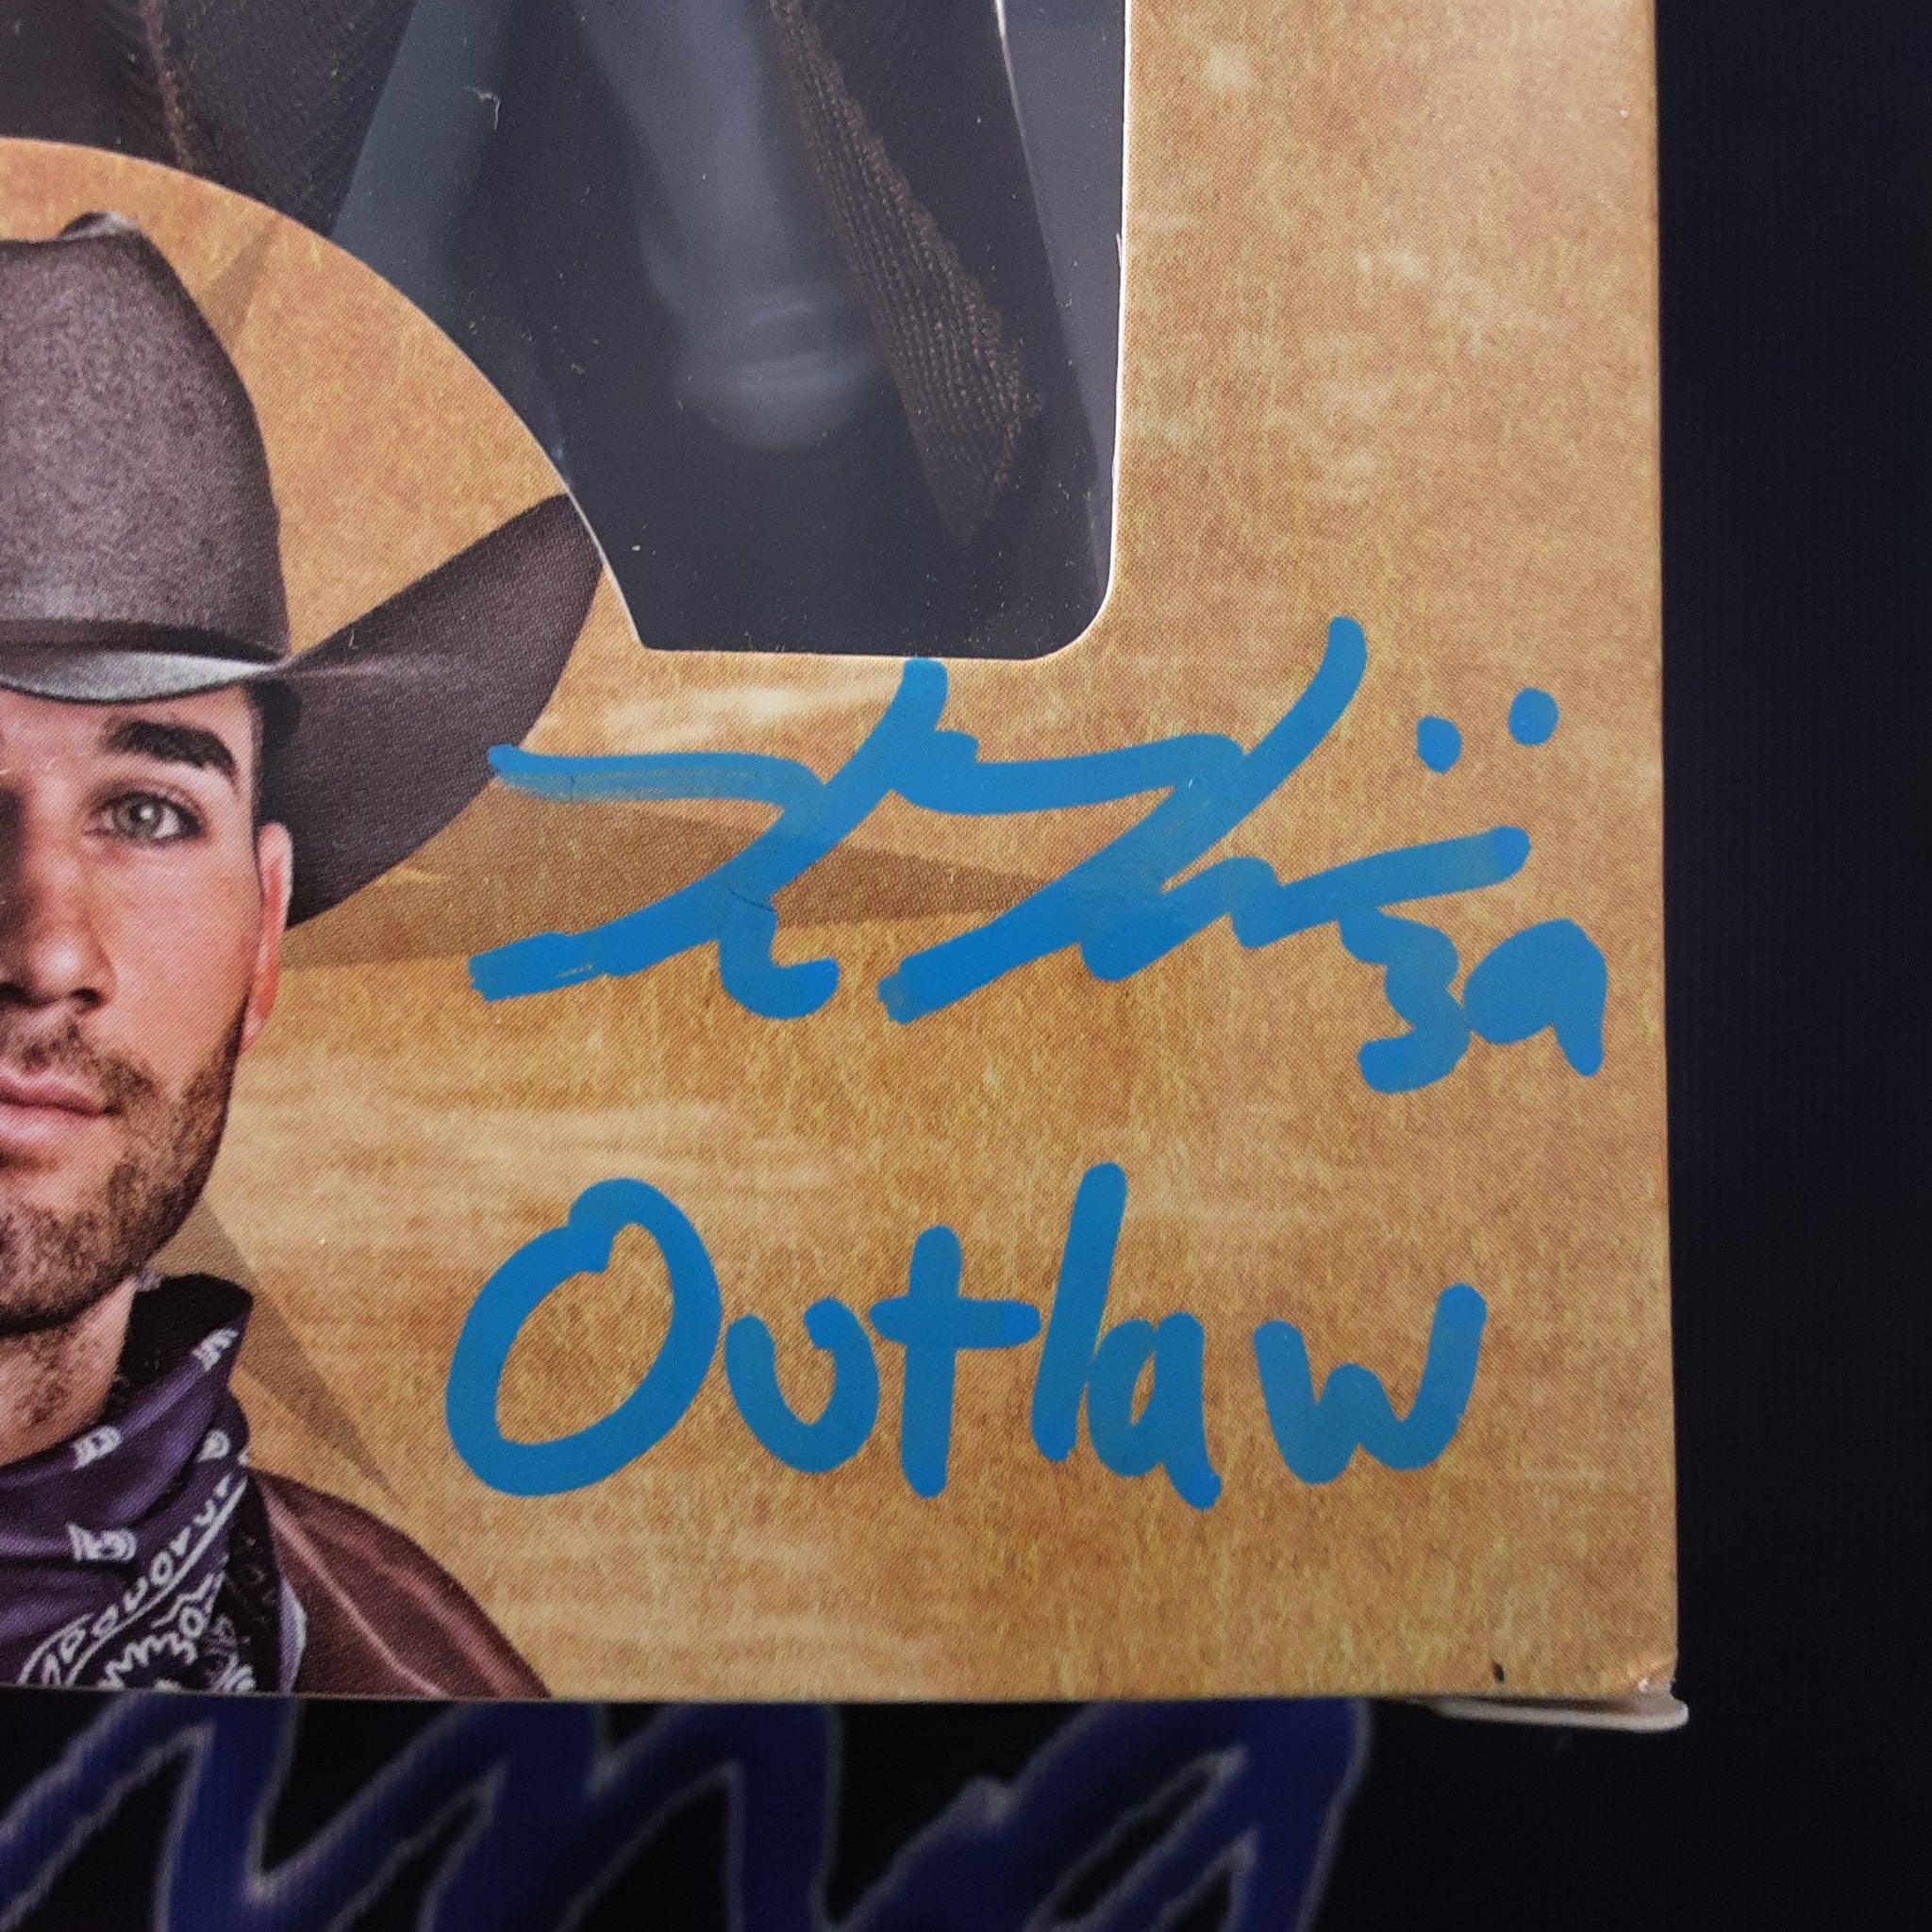 Kevin Kiermaier Authentic Signed Outlaw Figure Autographed JSA.